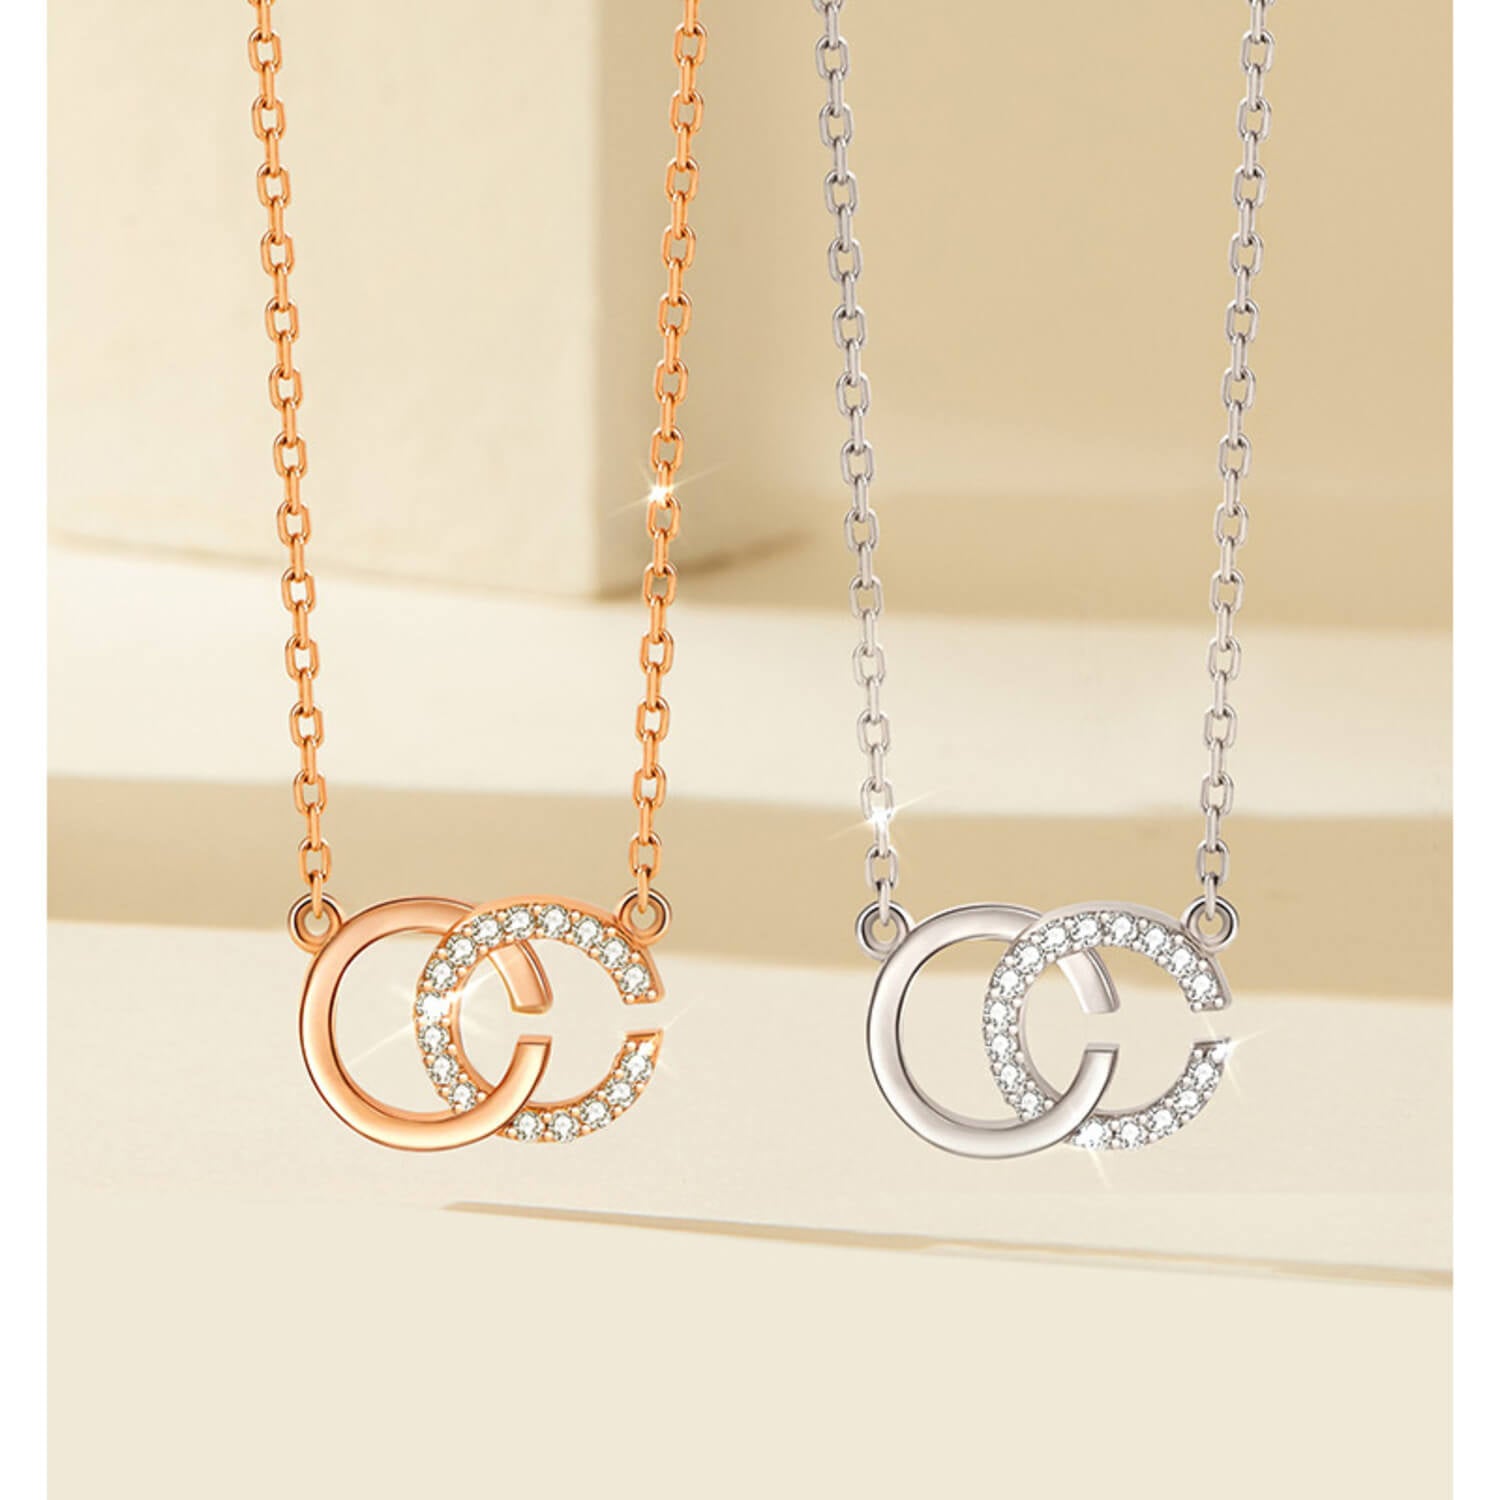 cc necklace chanel